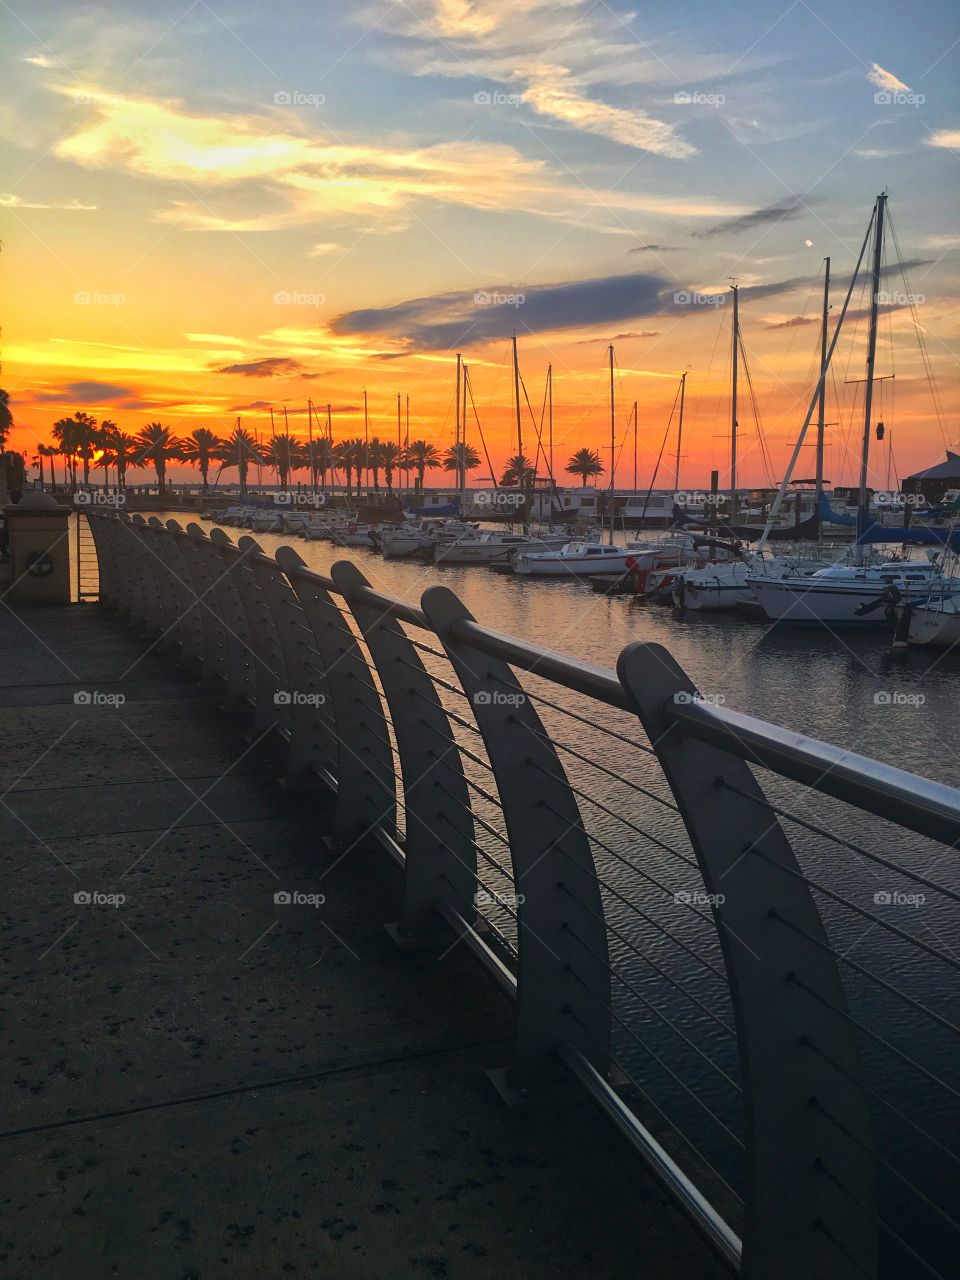 Water, Sunset, Pier, No Person, Bridge